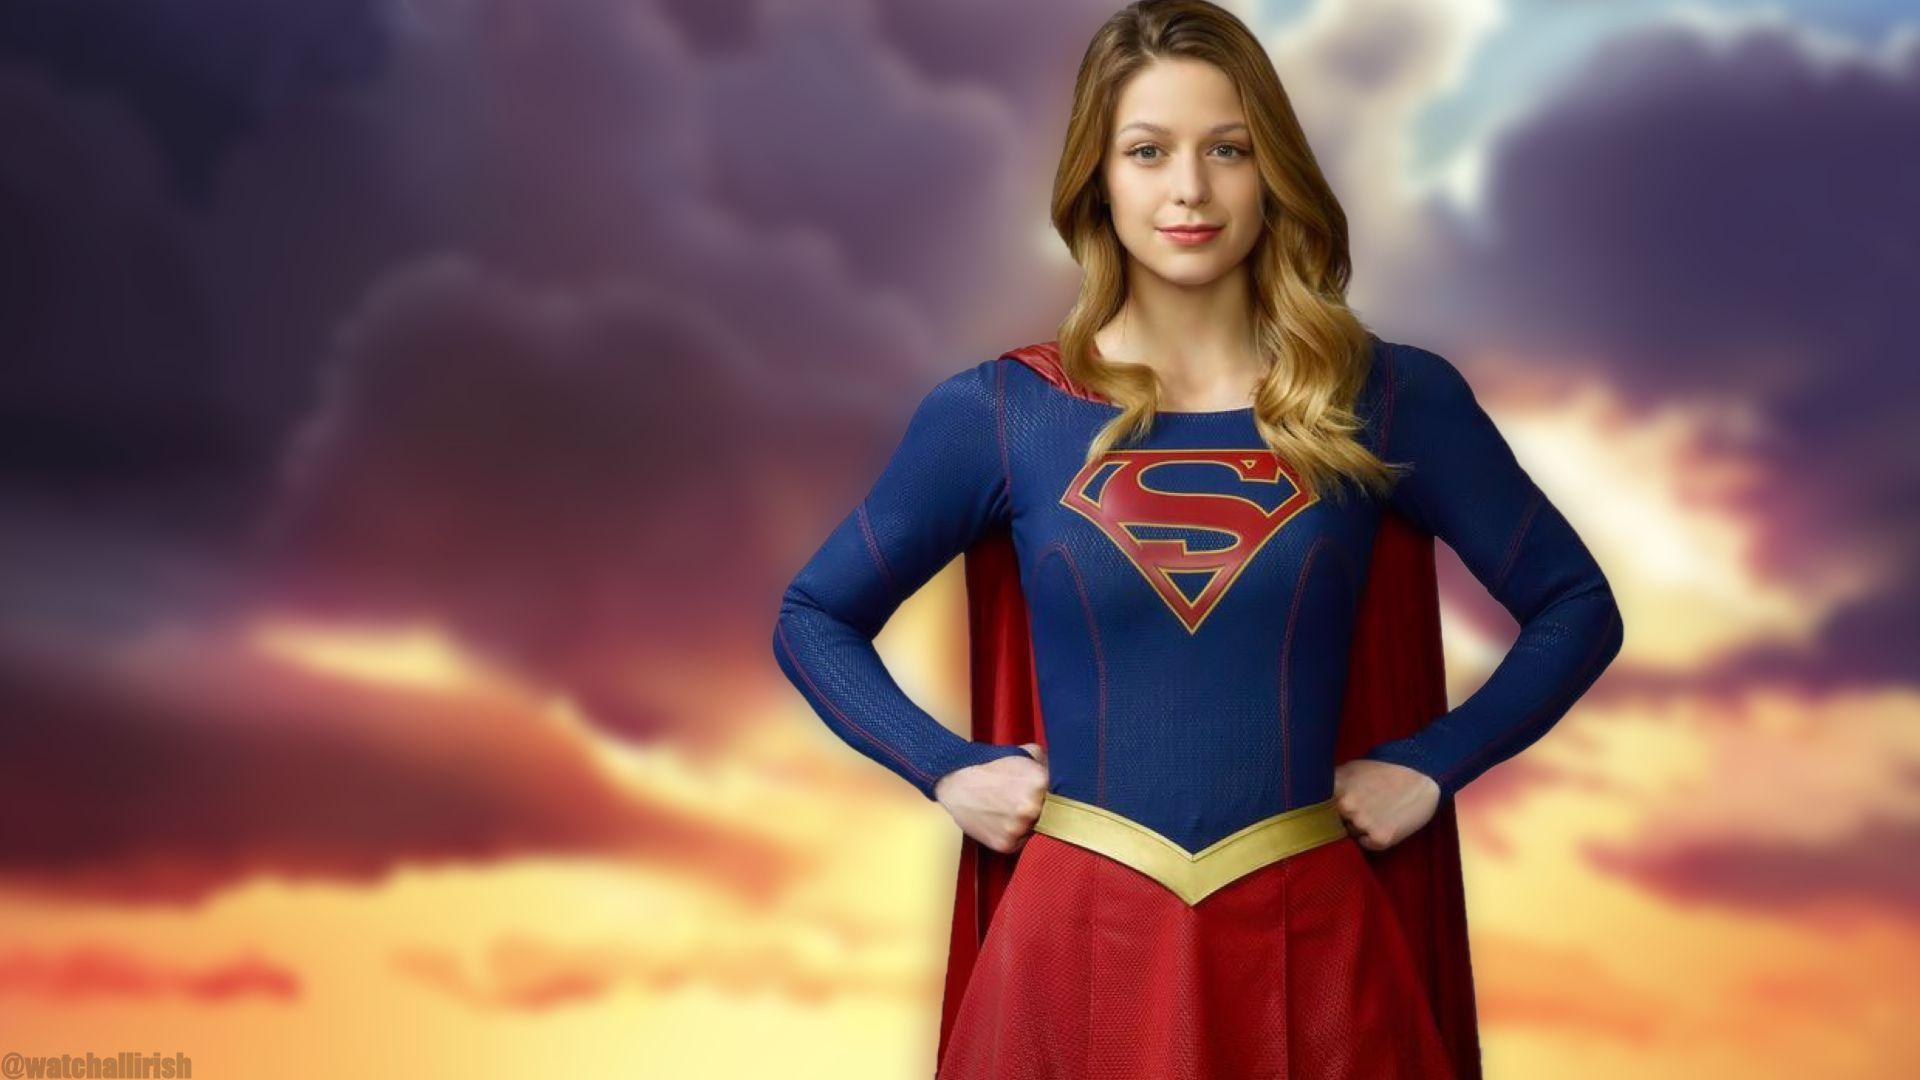 Supergirl TV Series Girl wallpaper HD 2016 in Supergirl